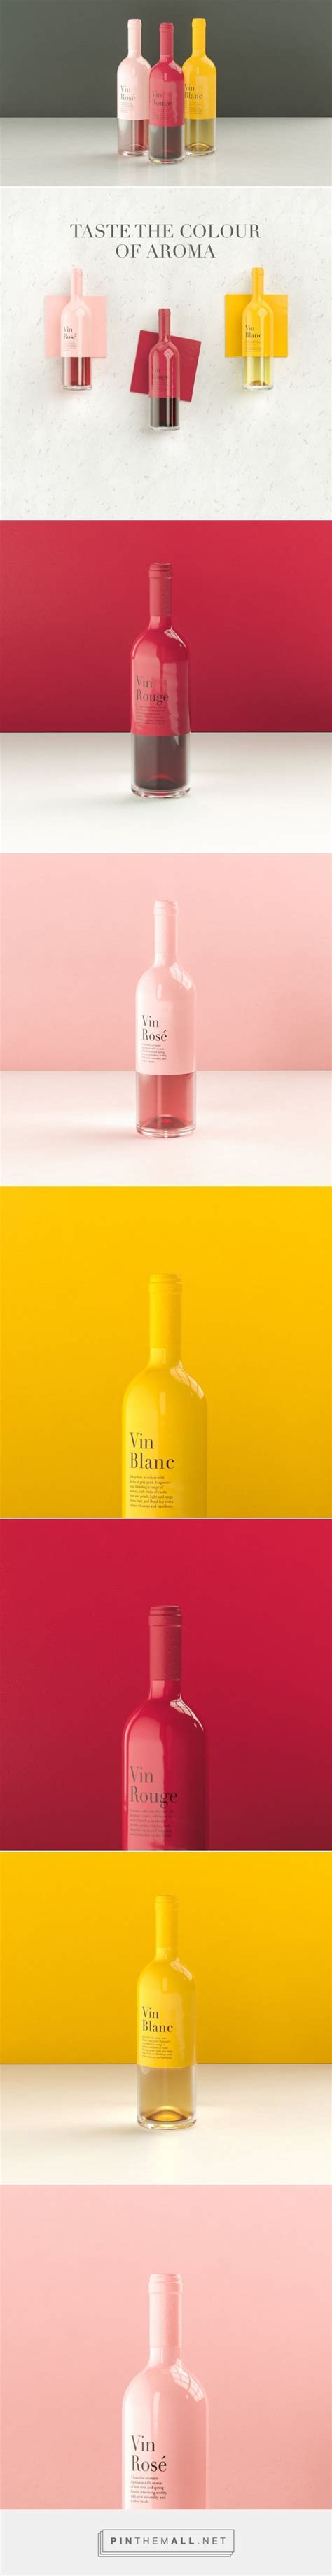 A Slick Wine Bottle Concept That Merges The Senses — The Dieline